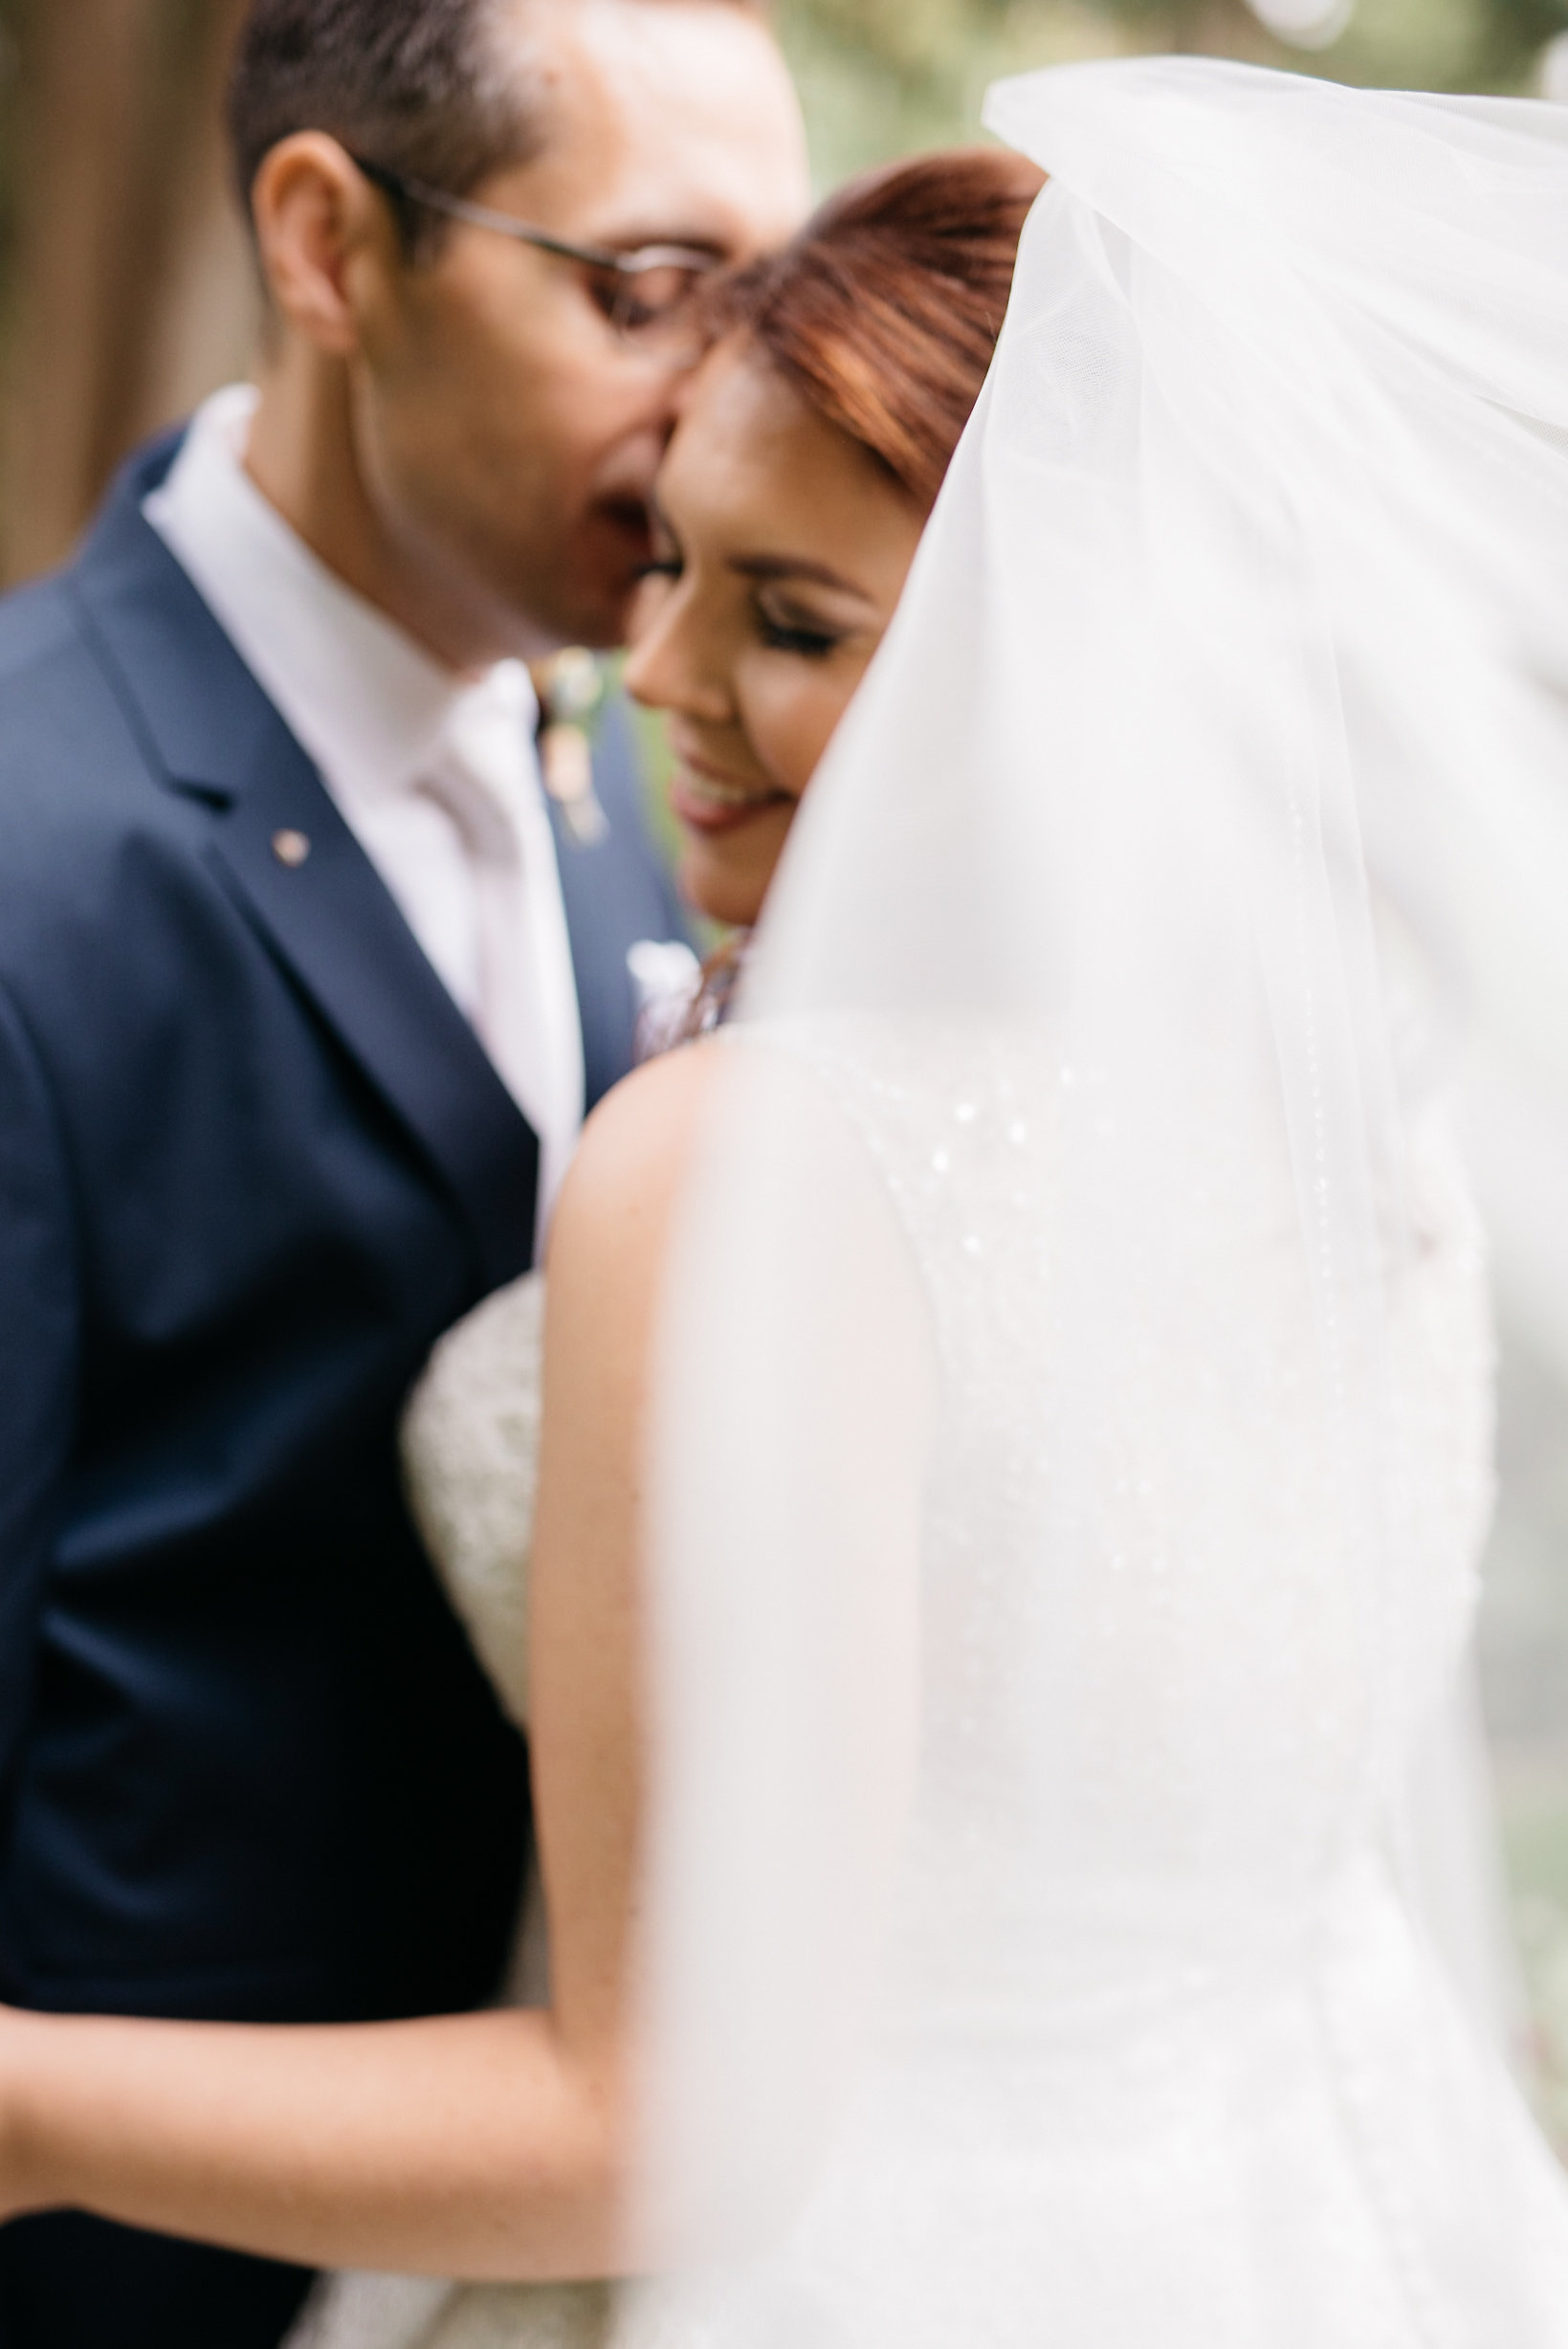 Romantic Toronto wedding photographer - Olive Photography